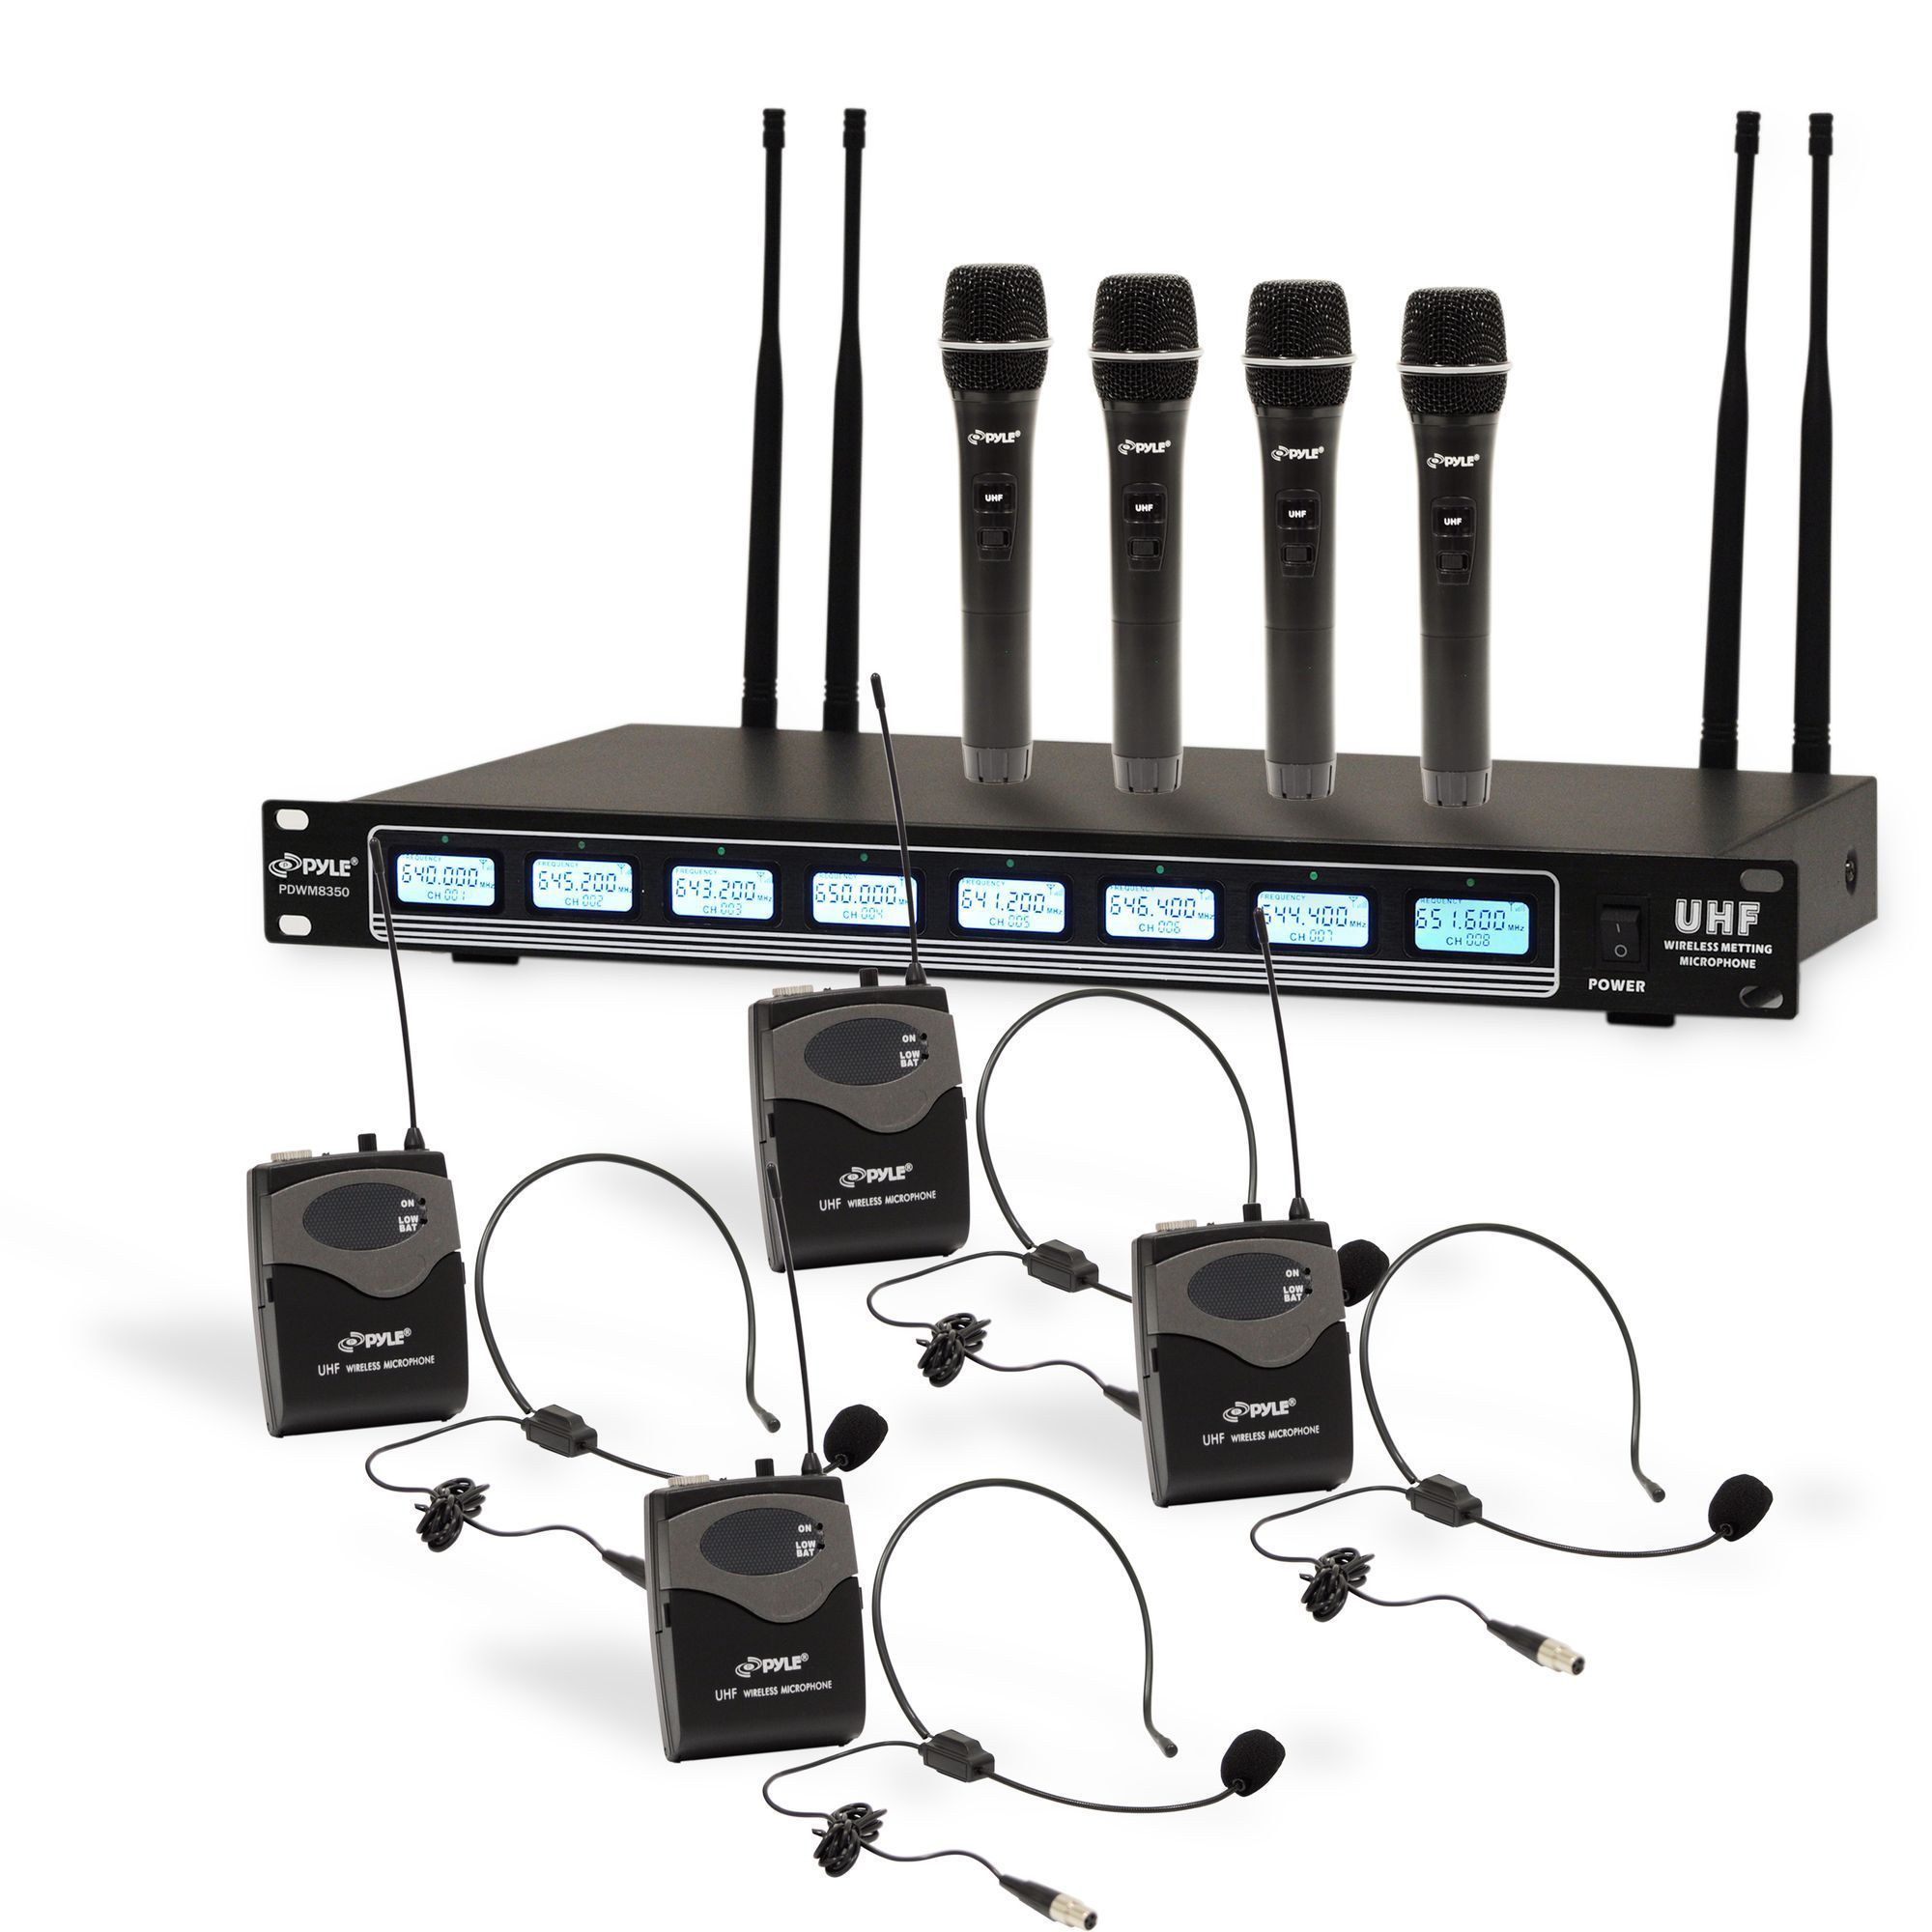 Pyle 8 Ch UHF Wireless Microphone System, Mountable Base, 4 handheld MICS, 4 Headsets, 4 Belt Packs, 4 Lavelier MICS,(PDWM8350)